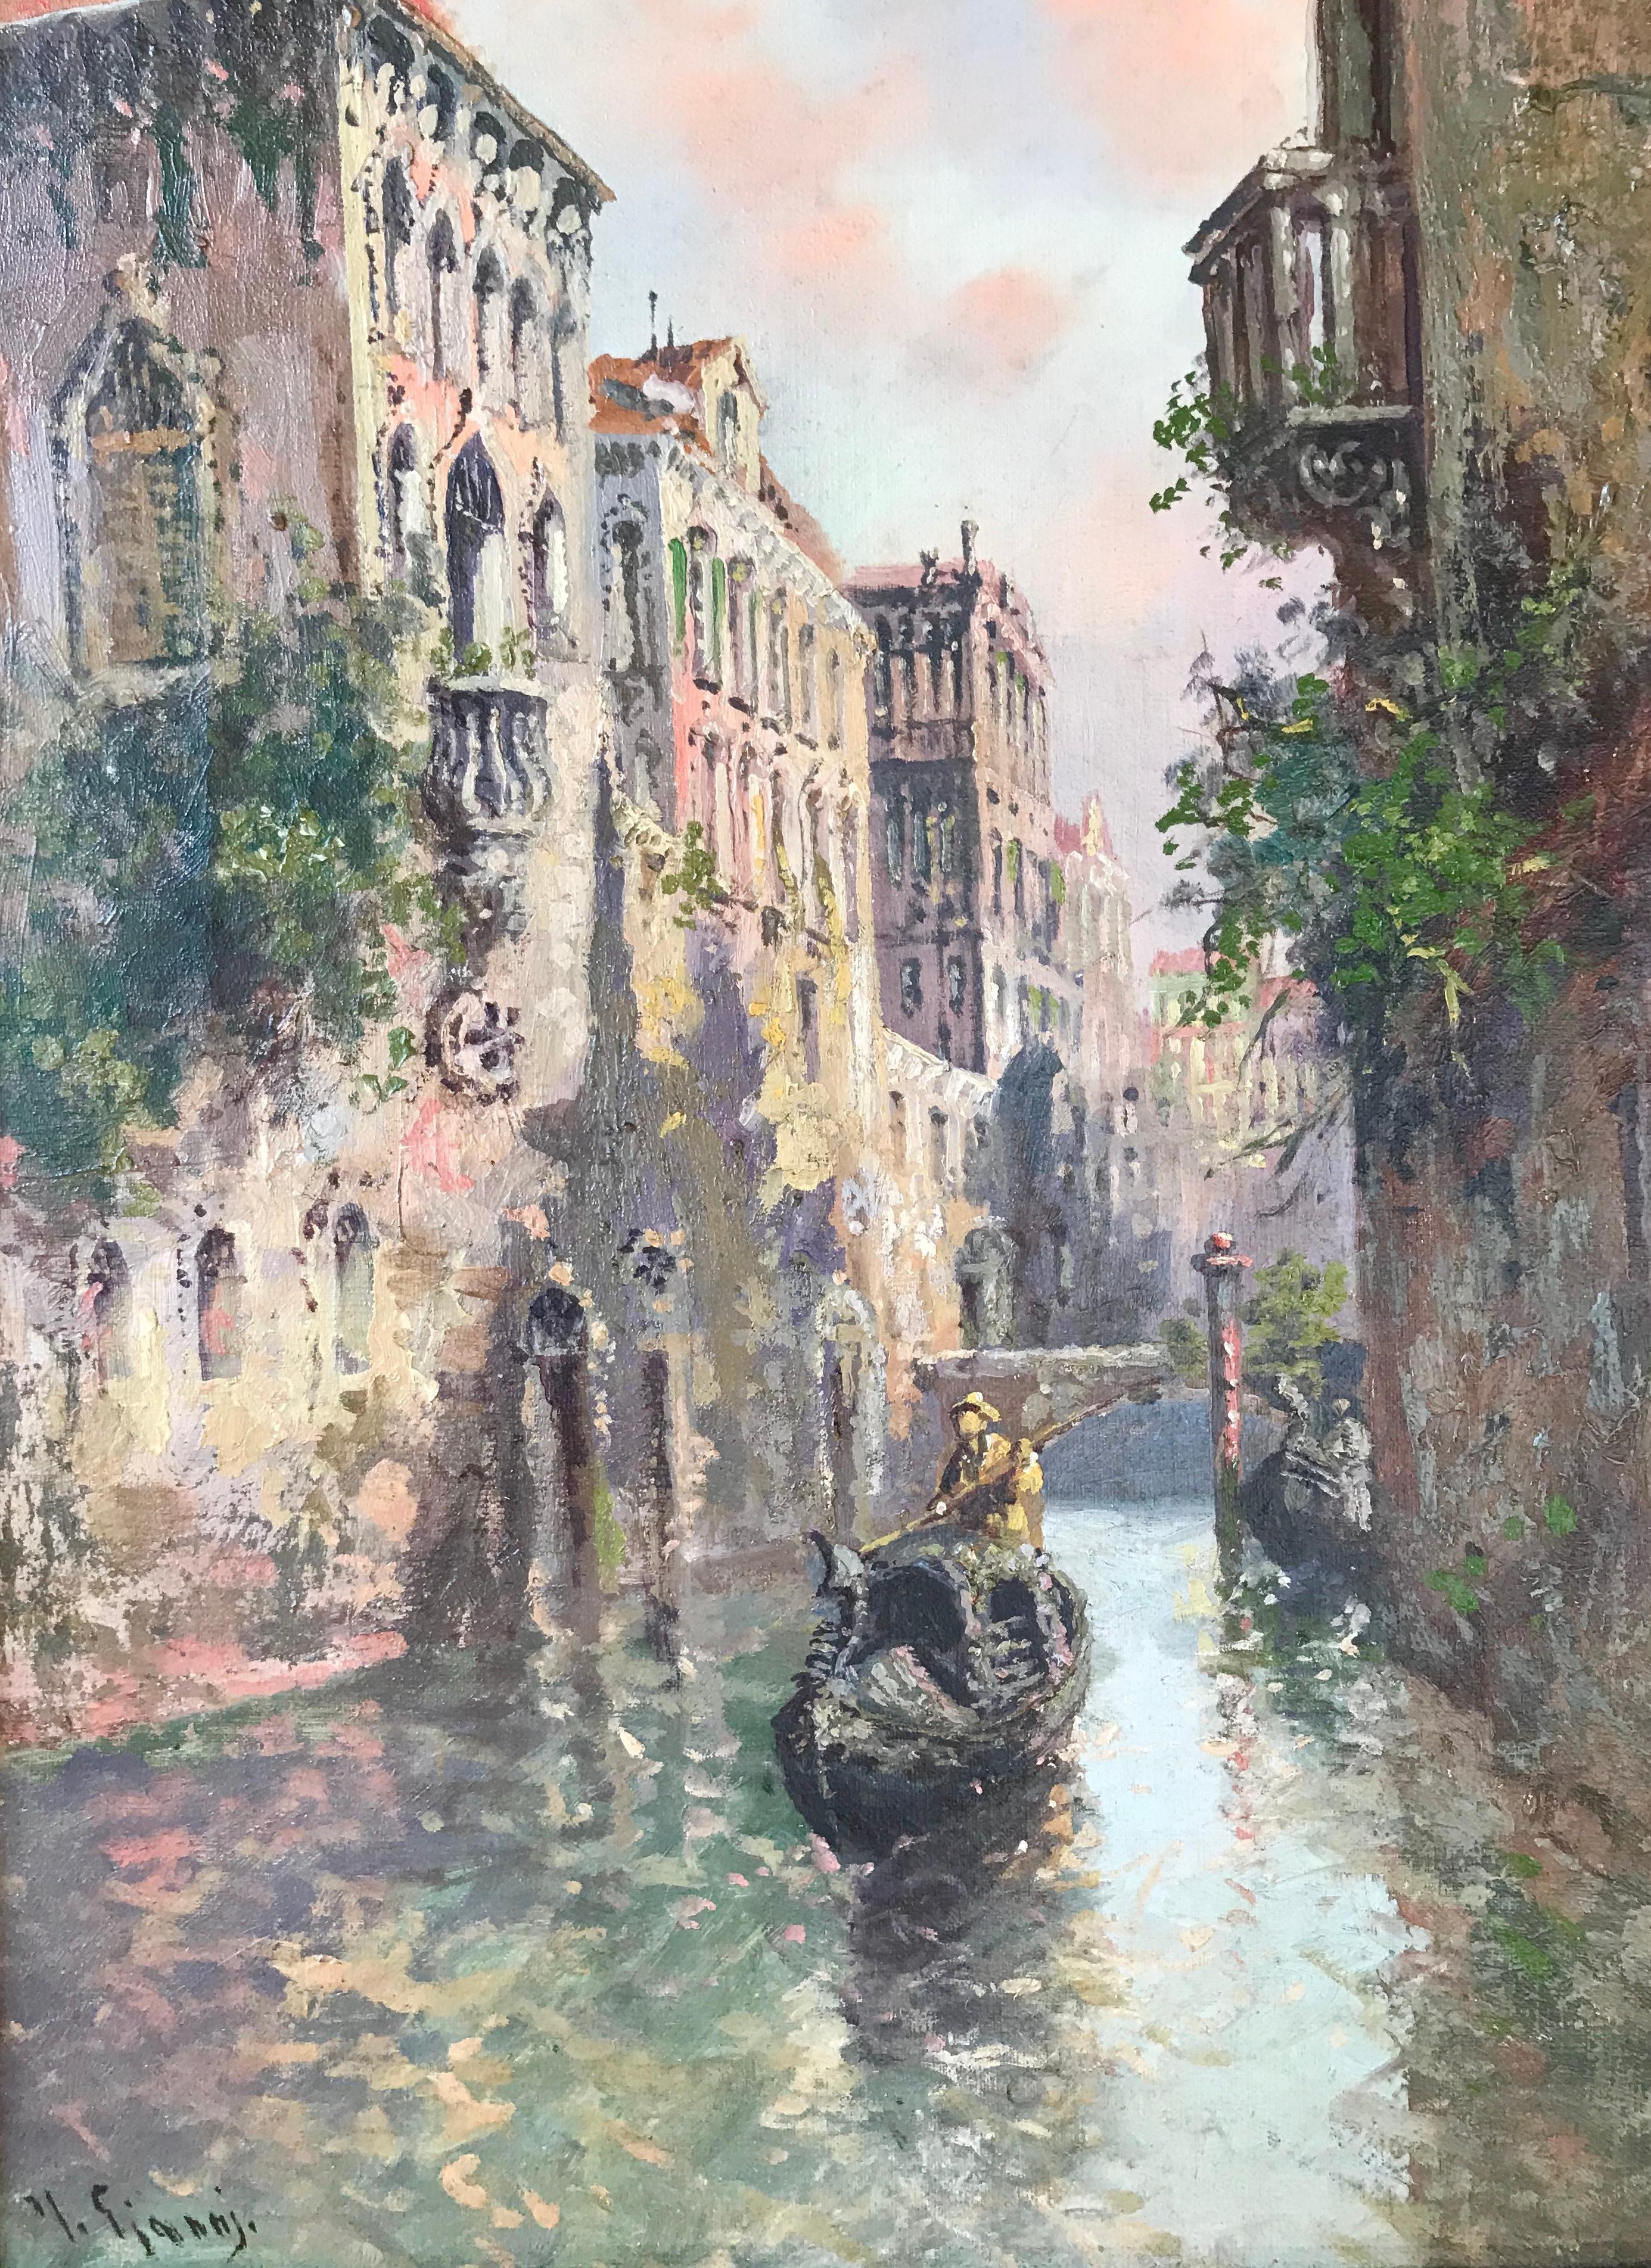 “Venezia” - Painting by Yves Gianni